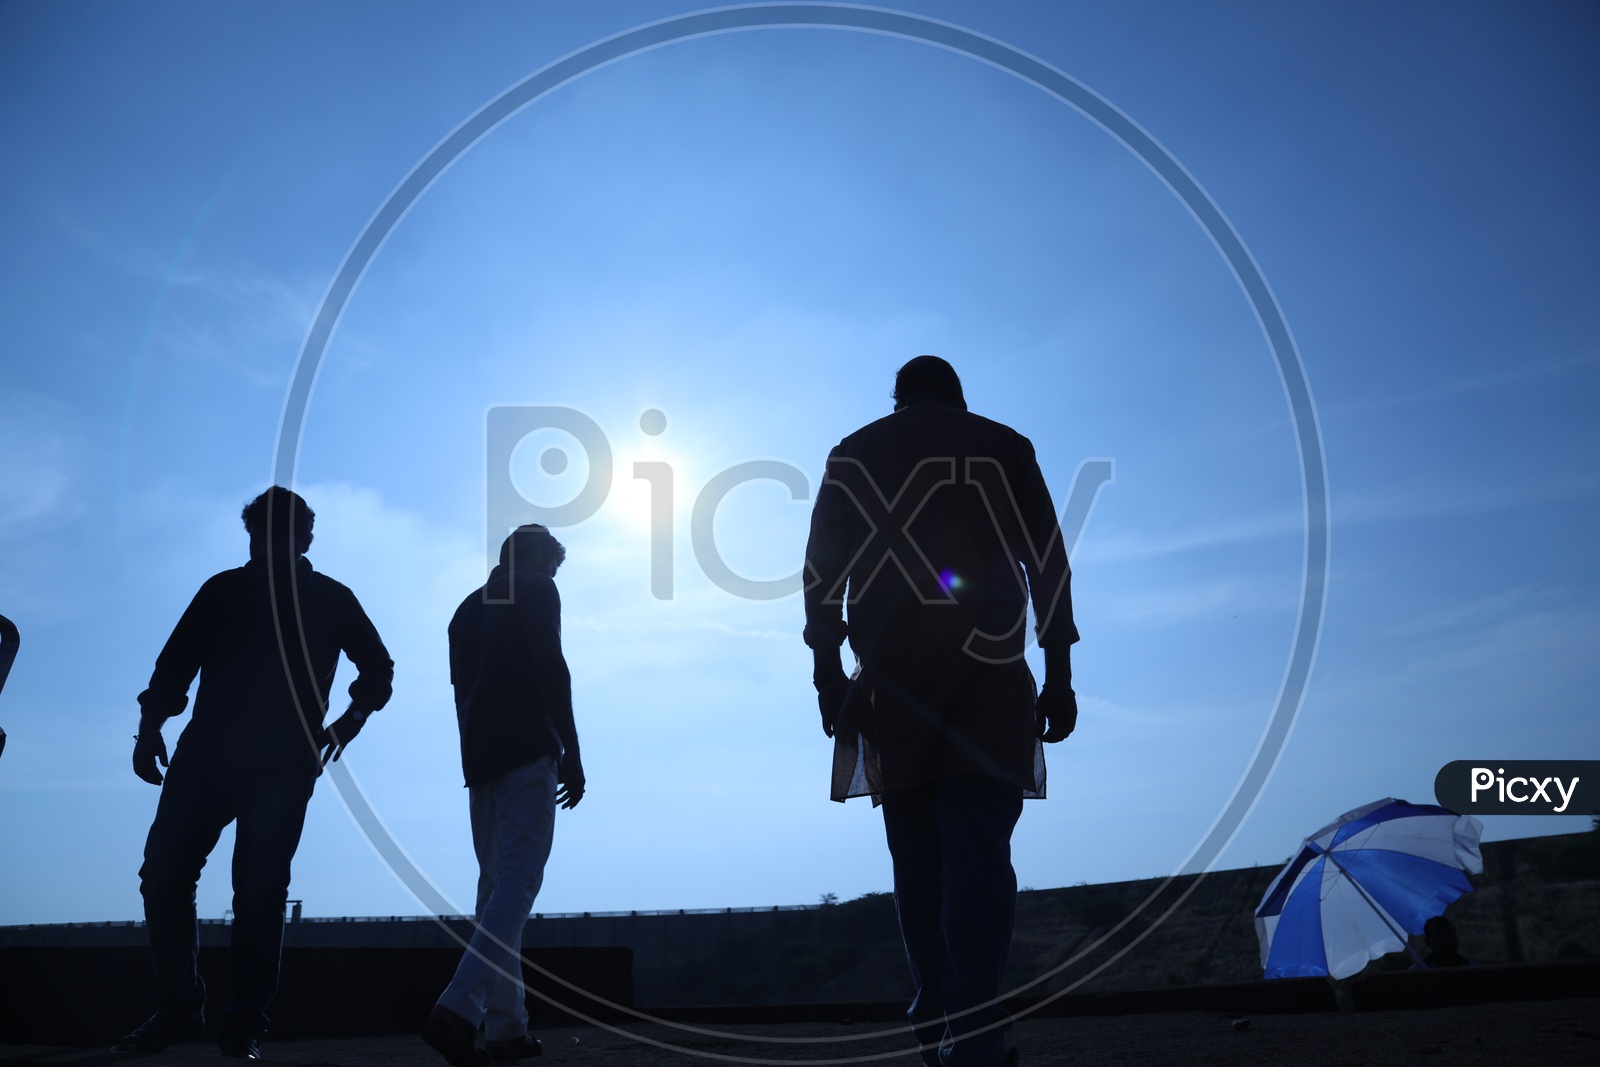 Silhouette of three men walking along the bridge side